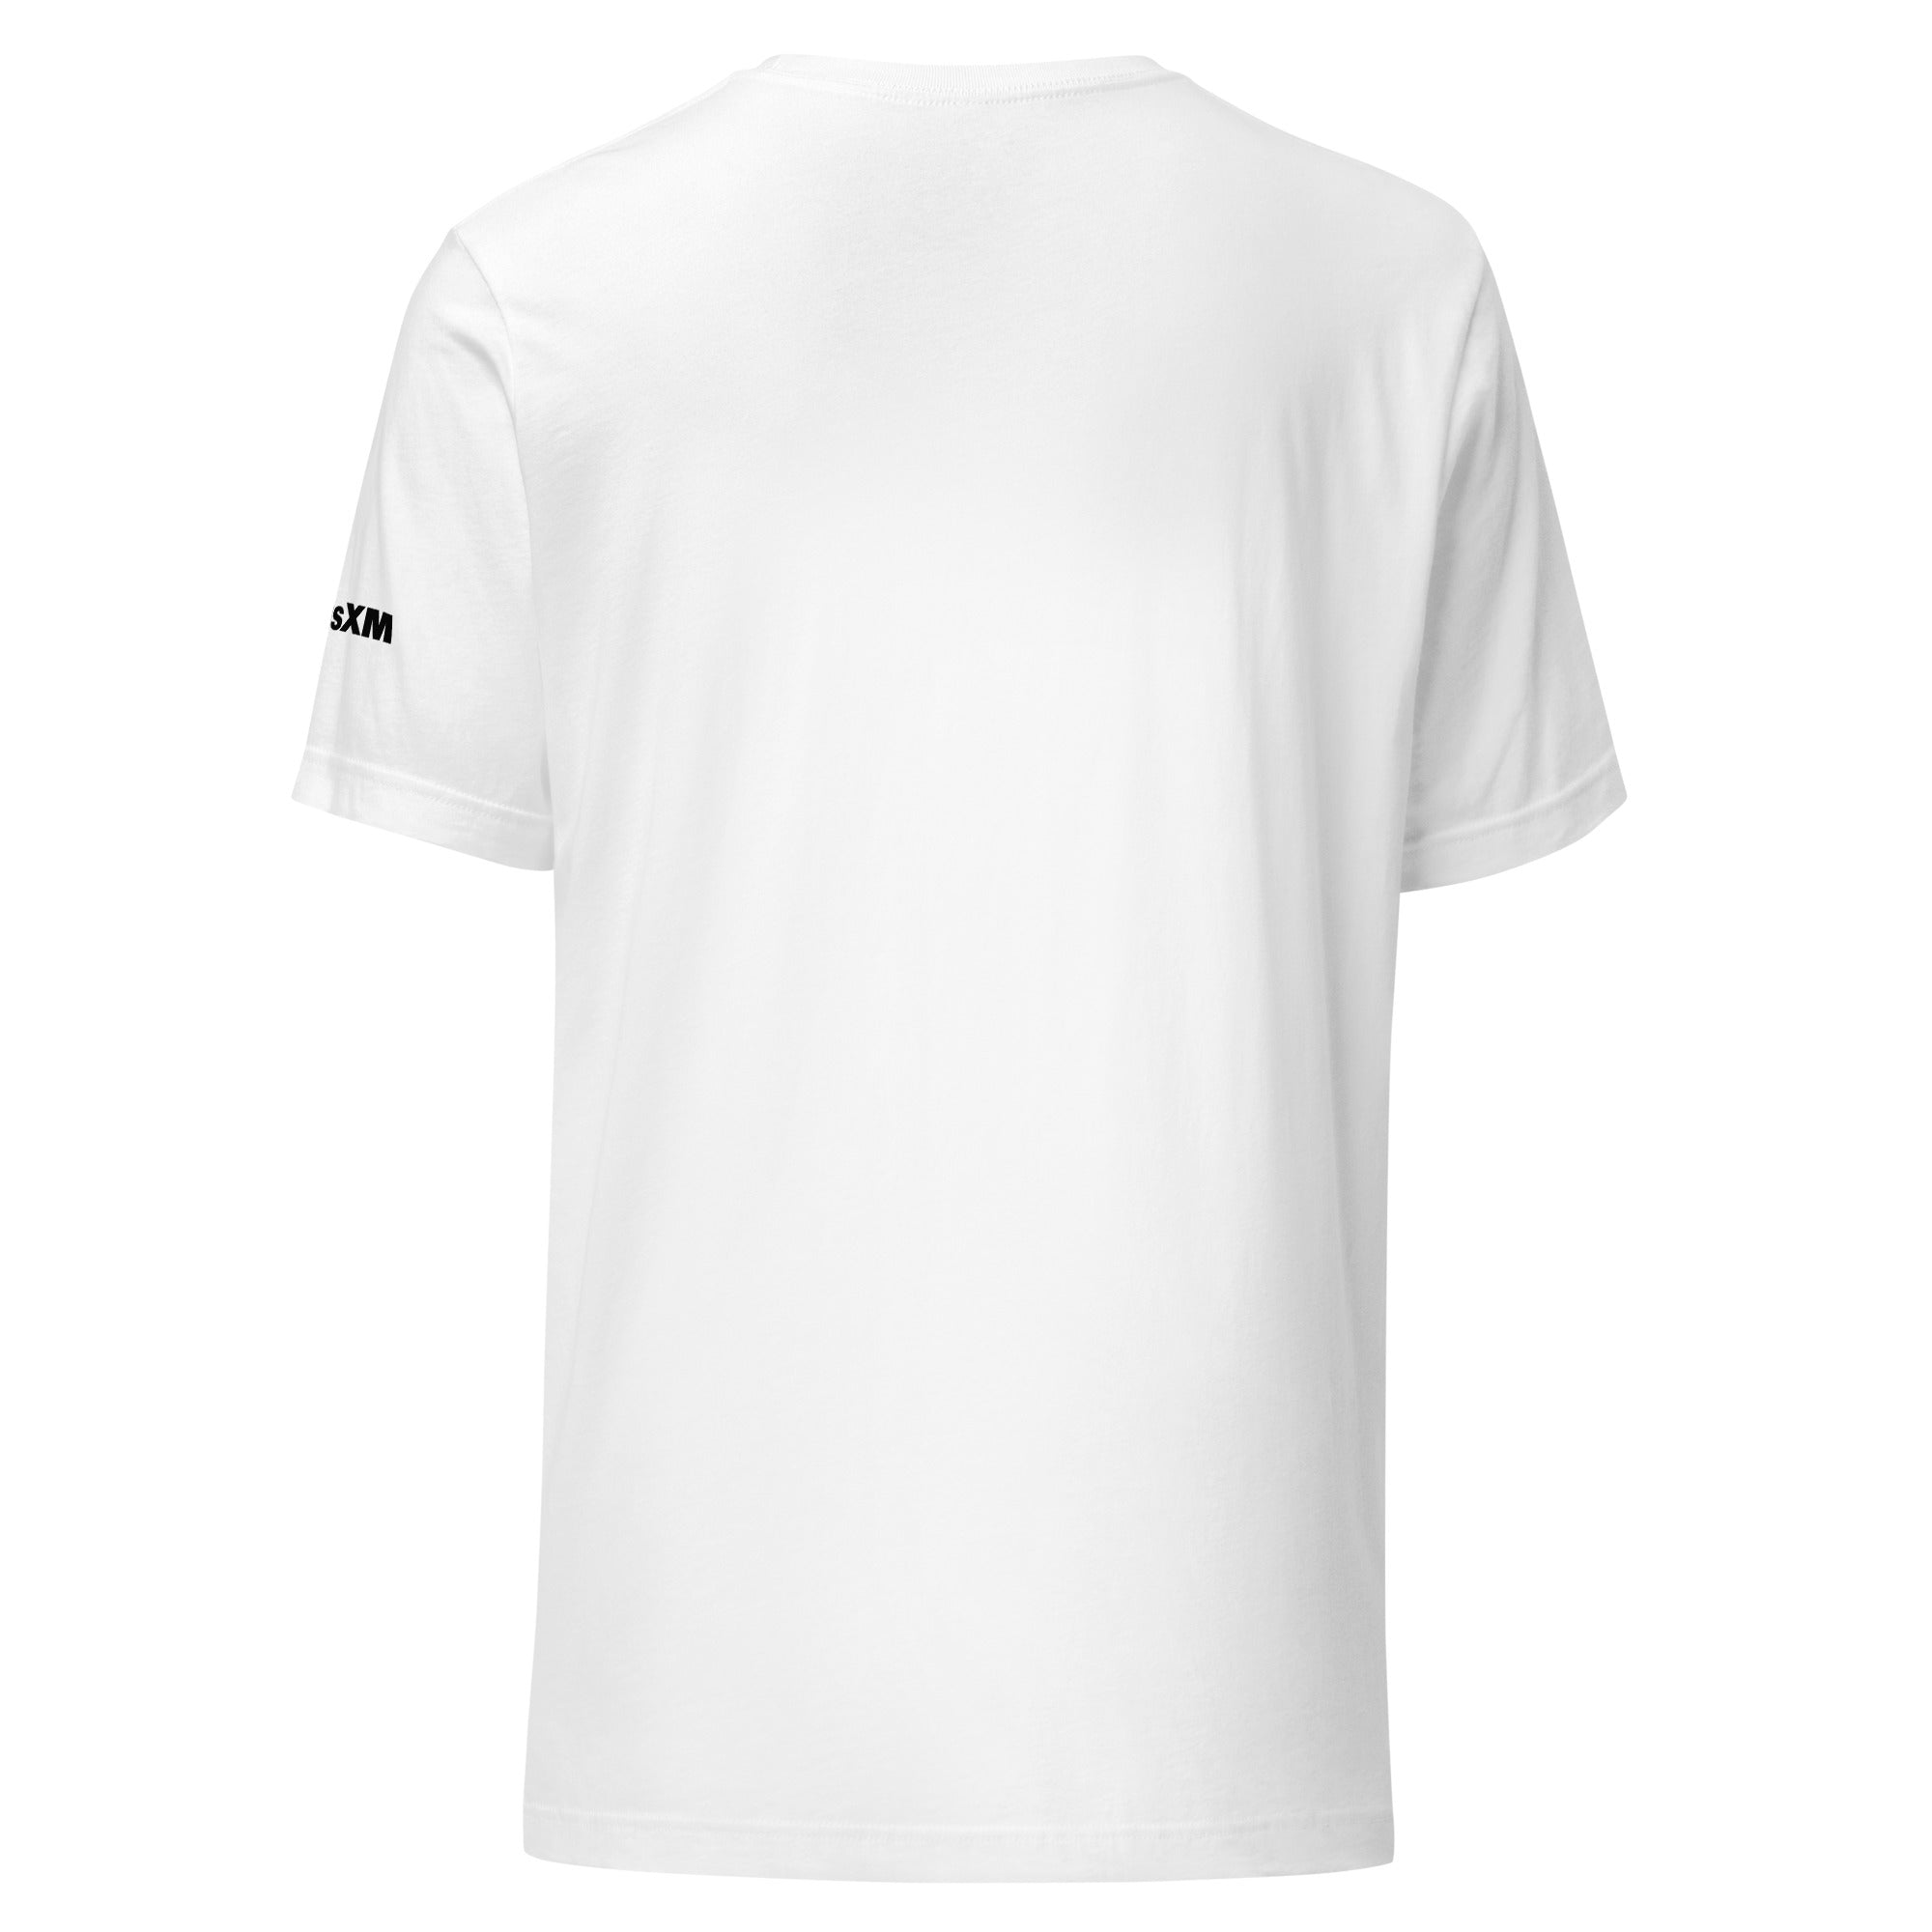 Liquid Metal: T-shirt (White)